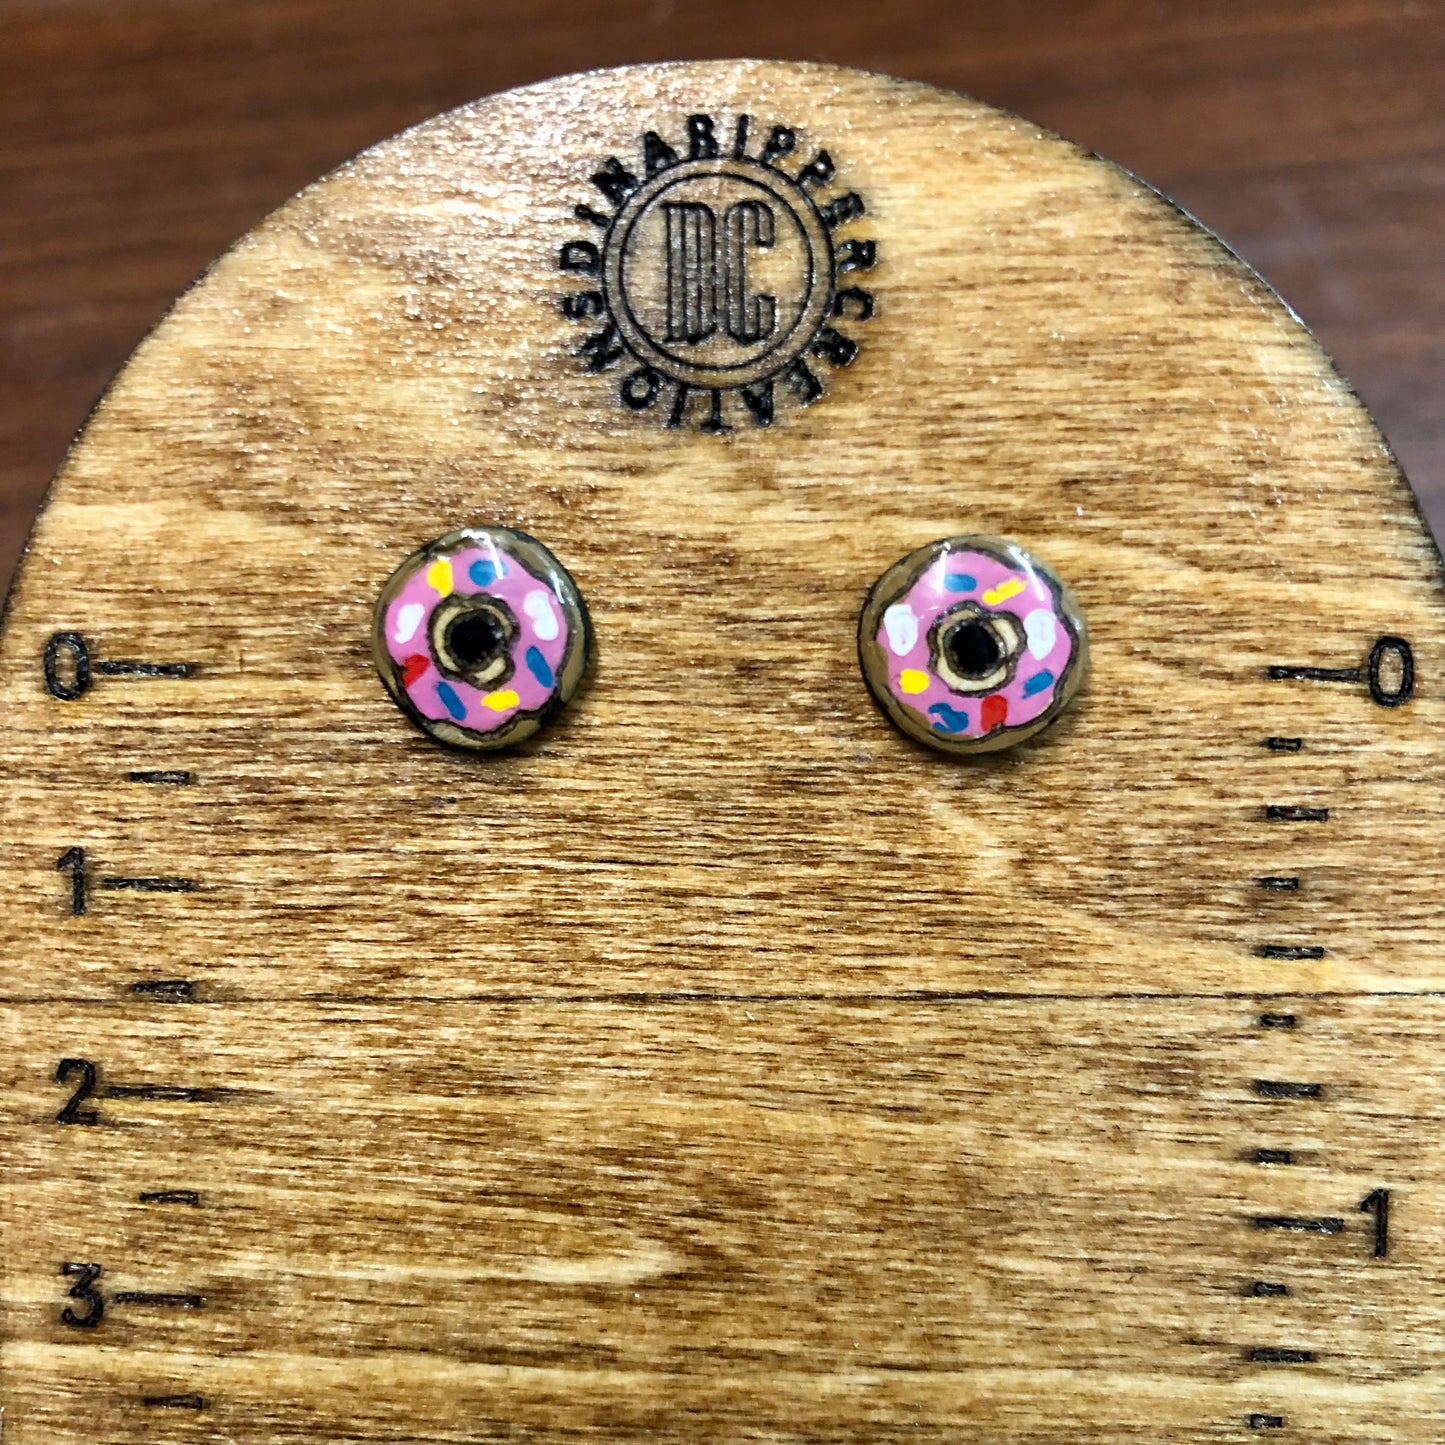 Hand-Painted Wooden Earrings